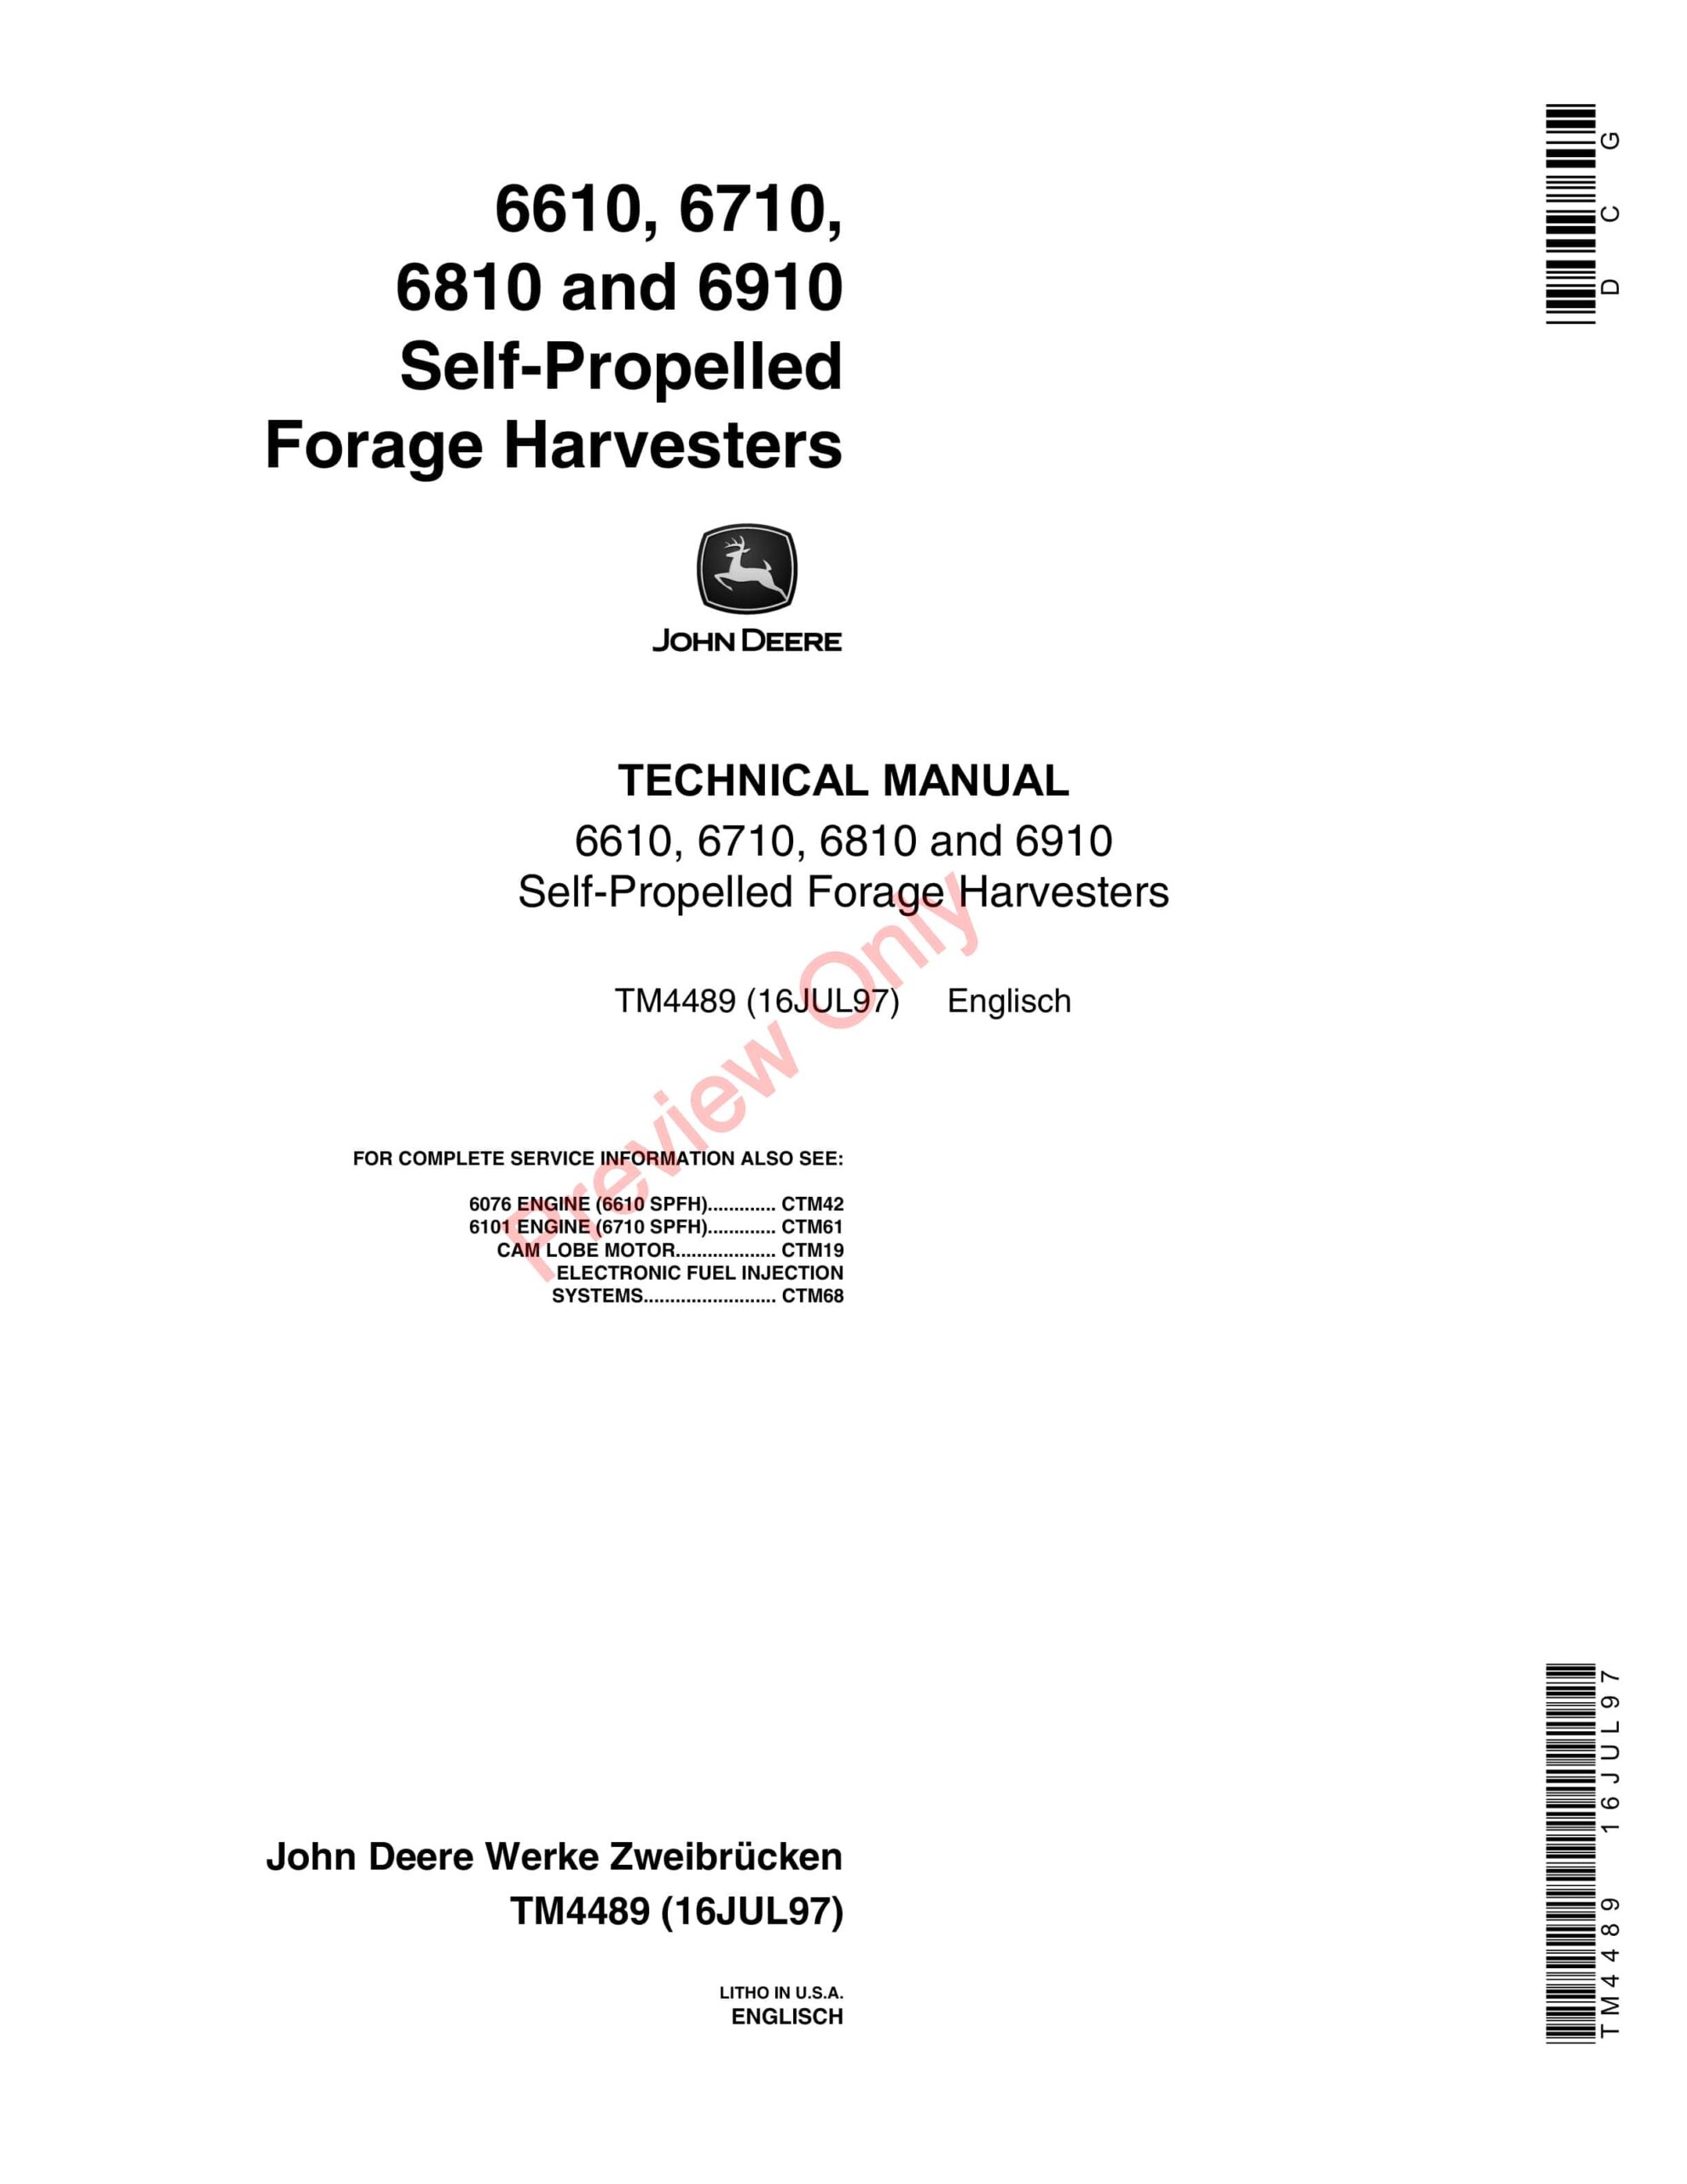 John Deere 6610, 6710, 6810 and 6910 Self-Propelled Forage Harvesters Technical Manual TM4489 16JUL97-1